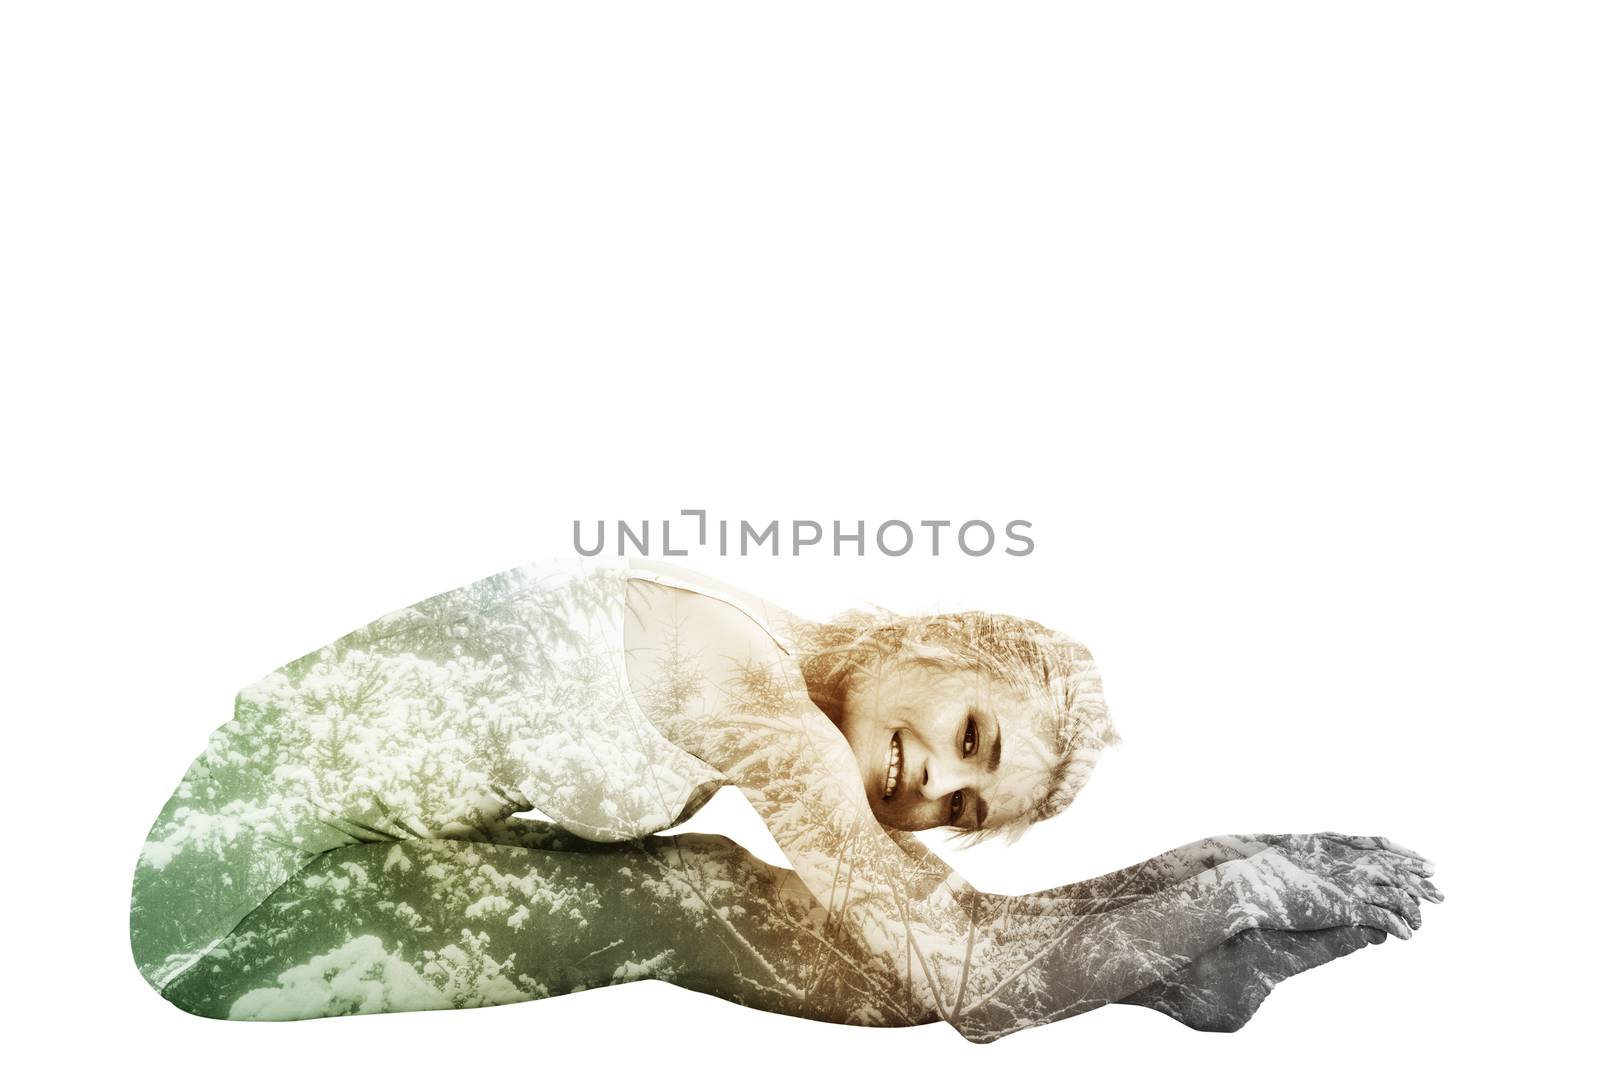 Composite image of toned woman doing the paschimottanasana pose by Wavebreakmedia